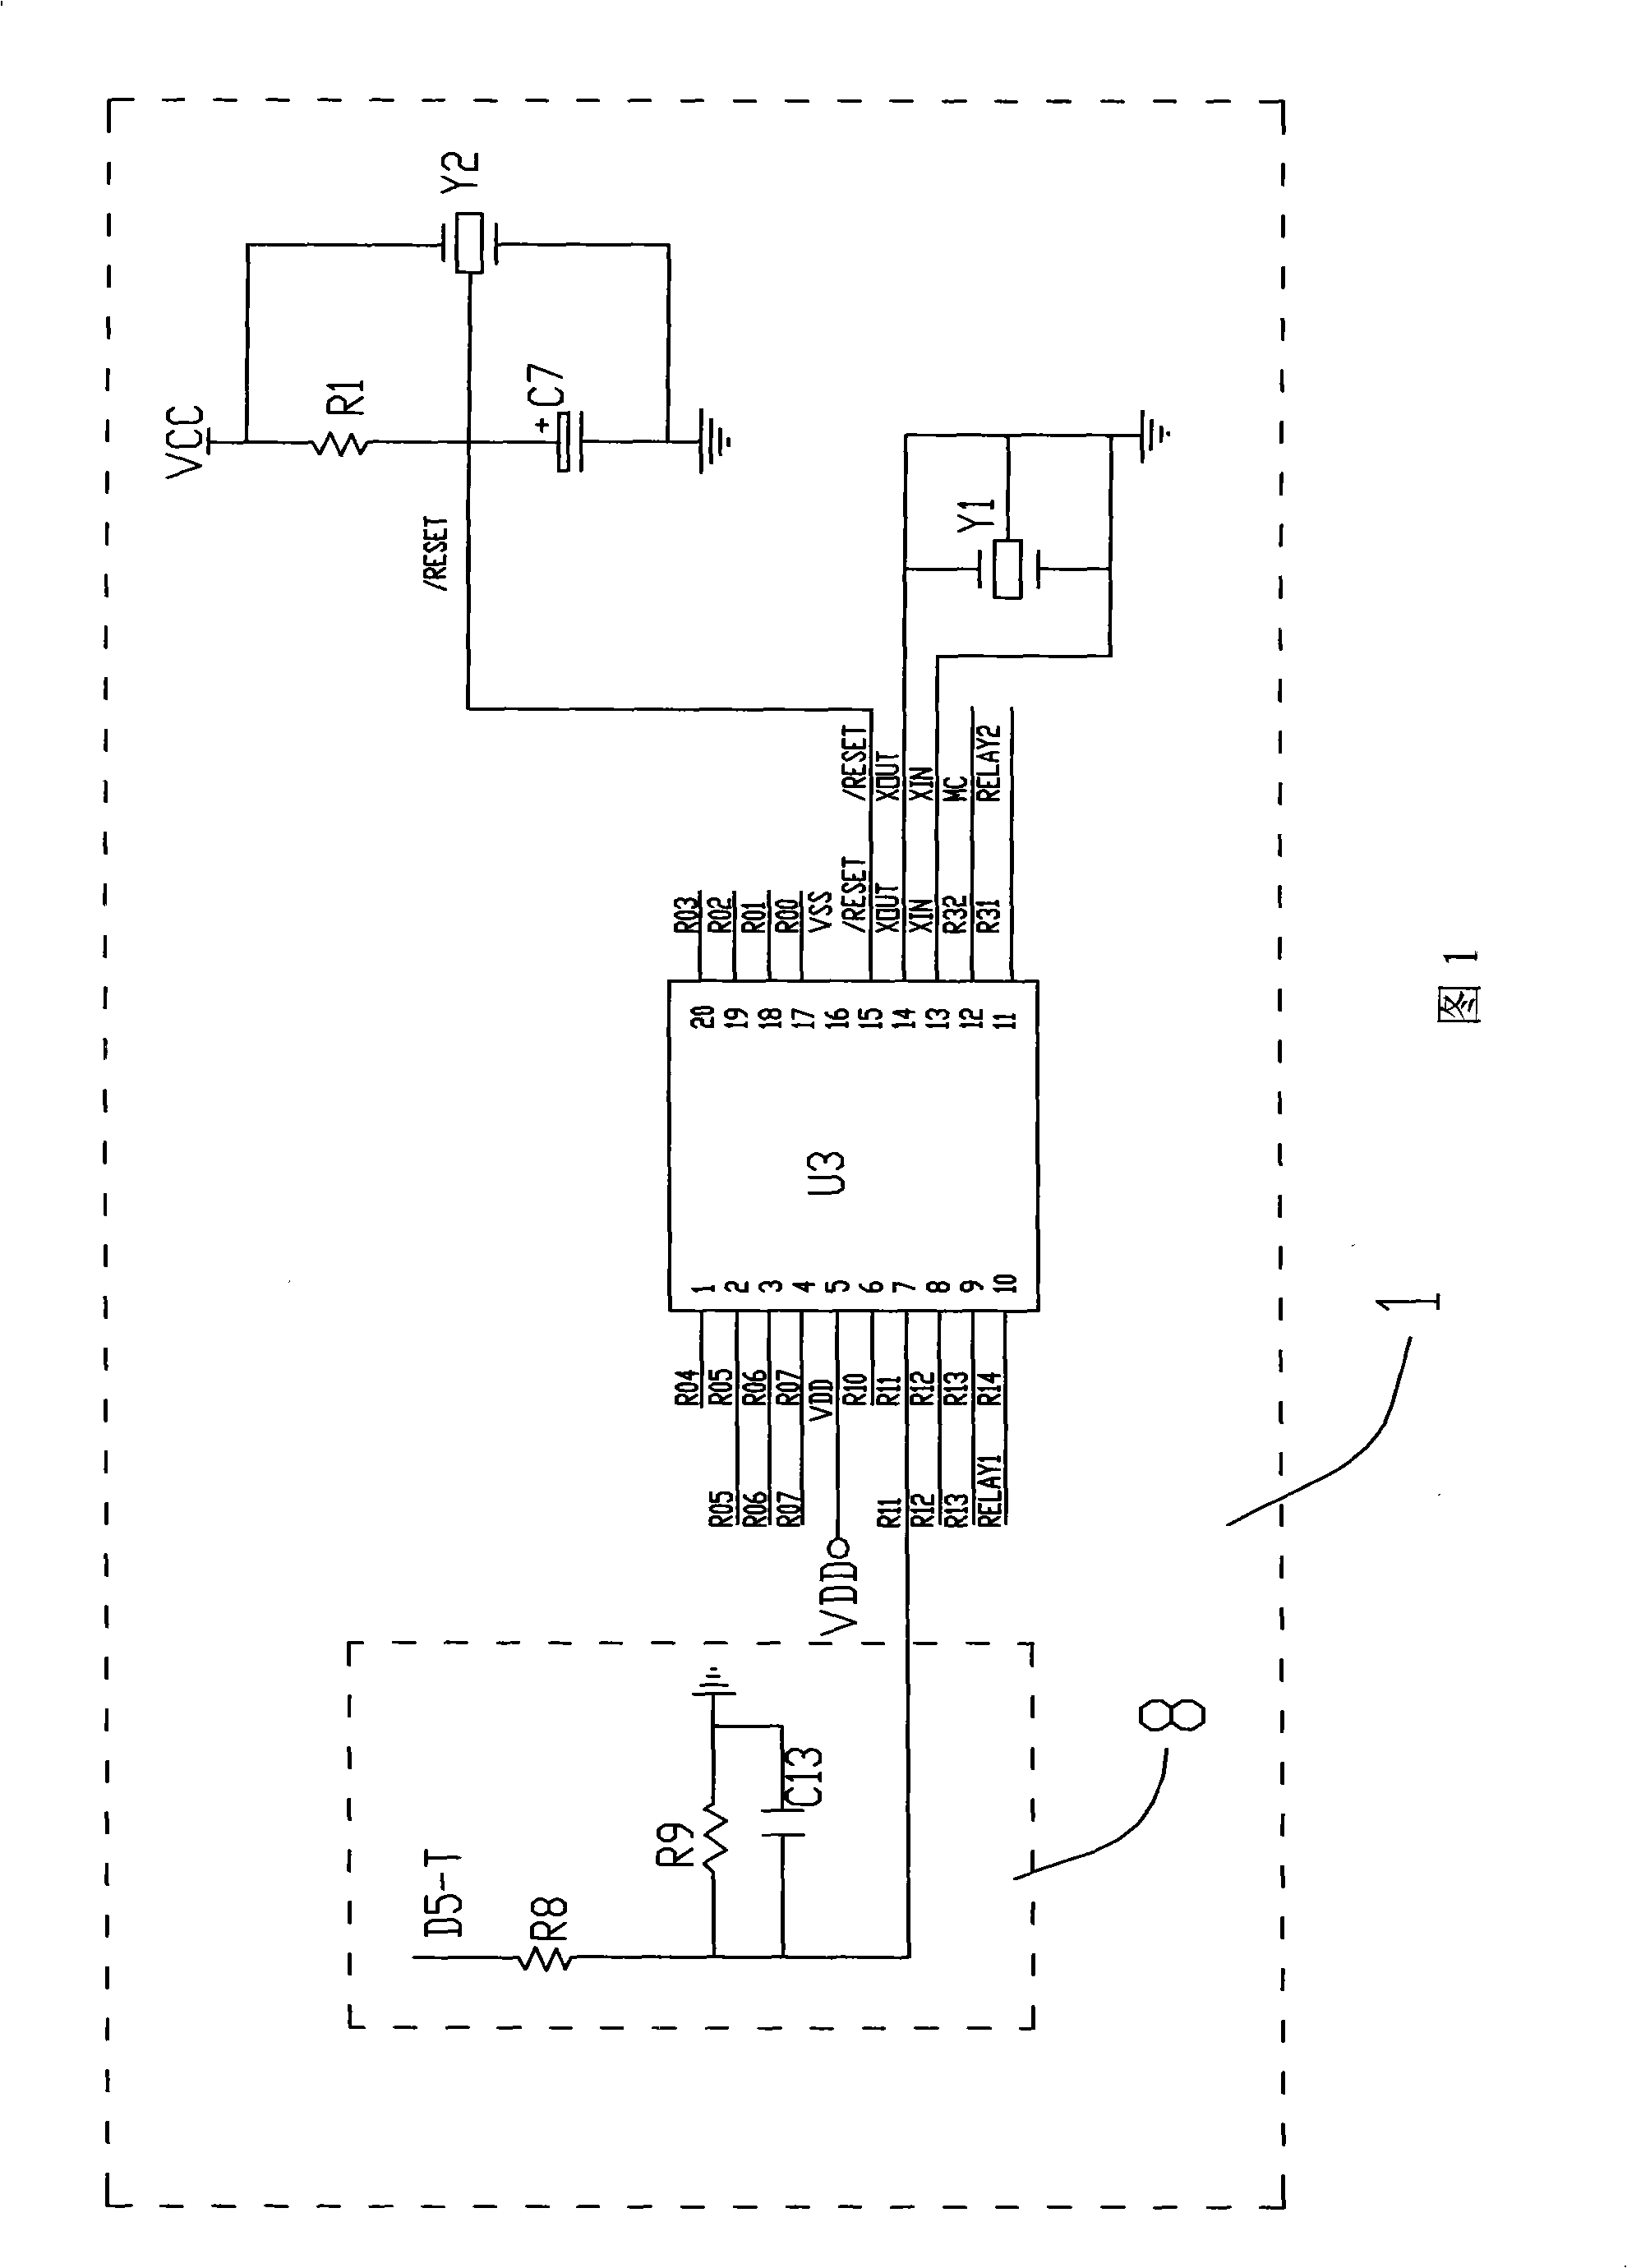 Circuit of pulping machine